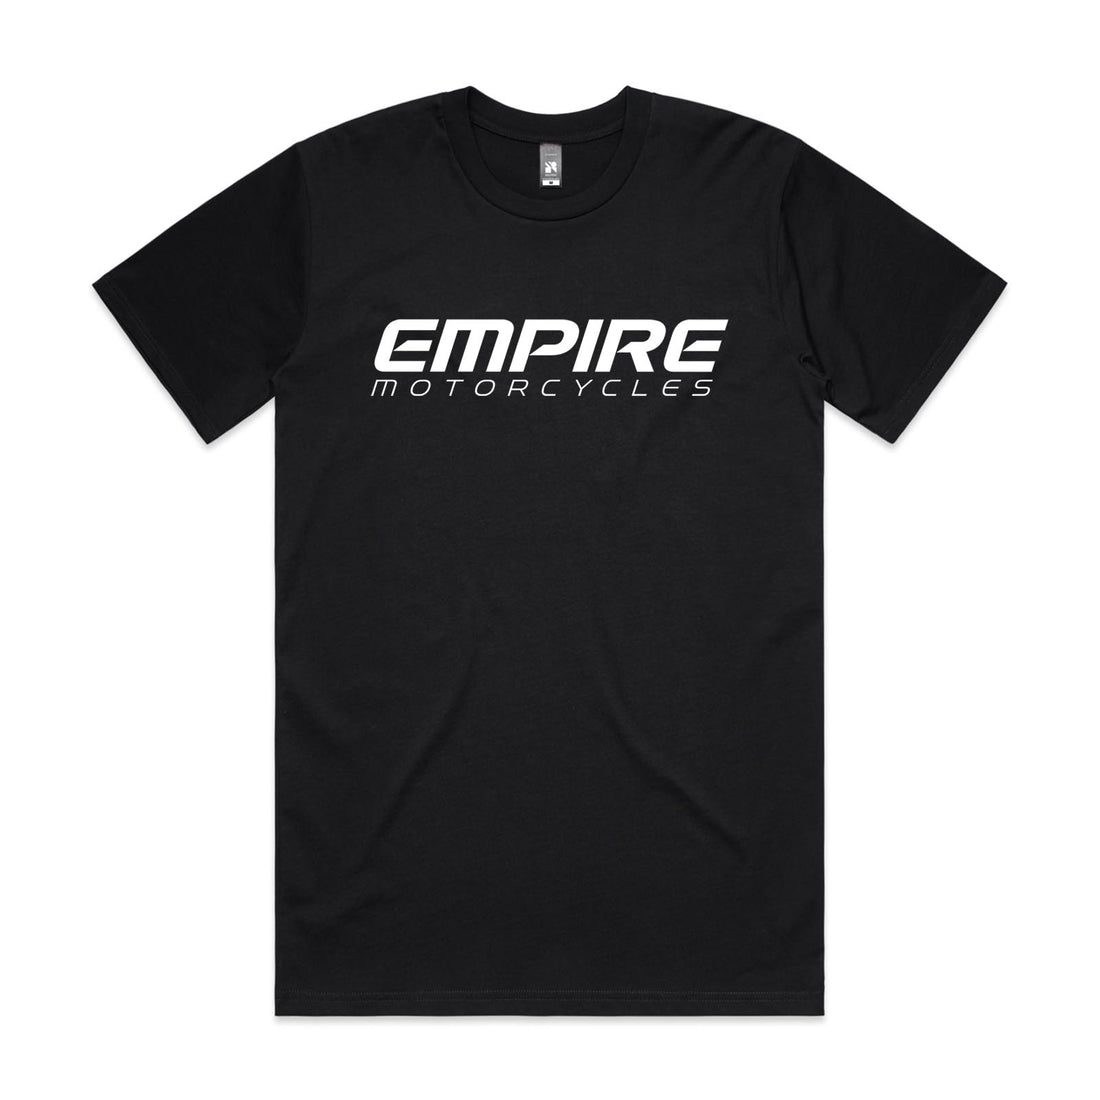 Empire Motorcycles Logo T-Shirt - Black